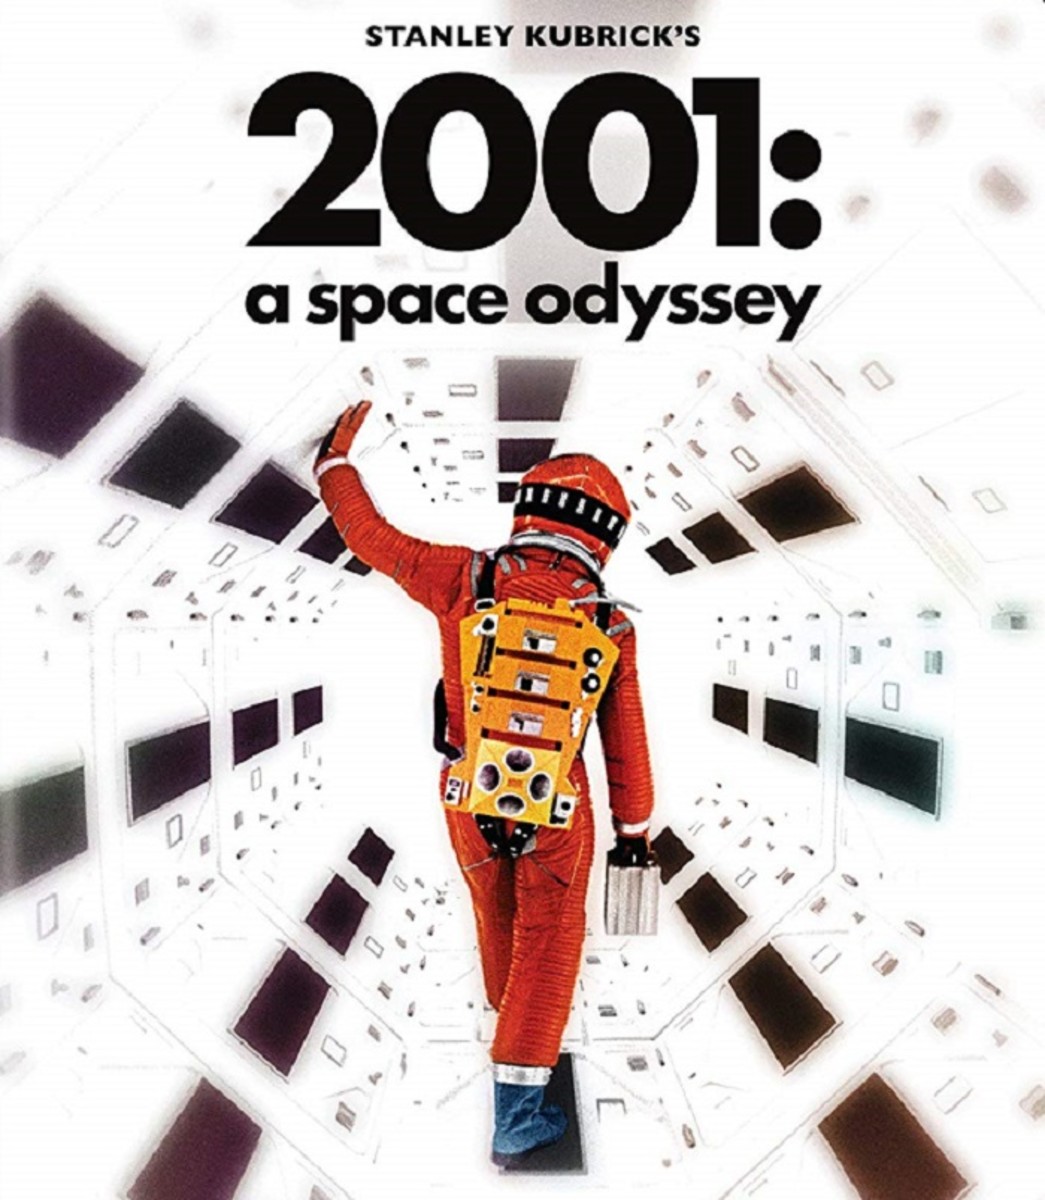 :2001: A Space Odyssey"